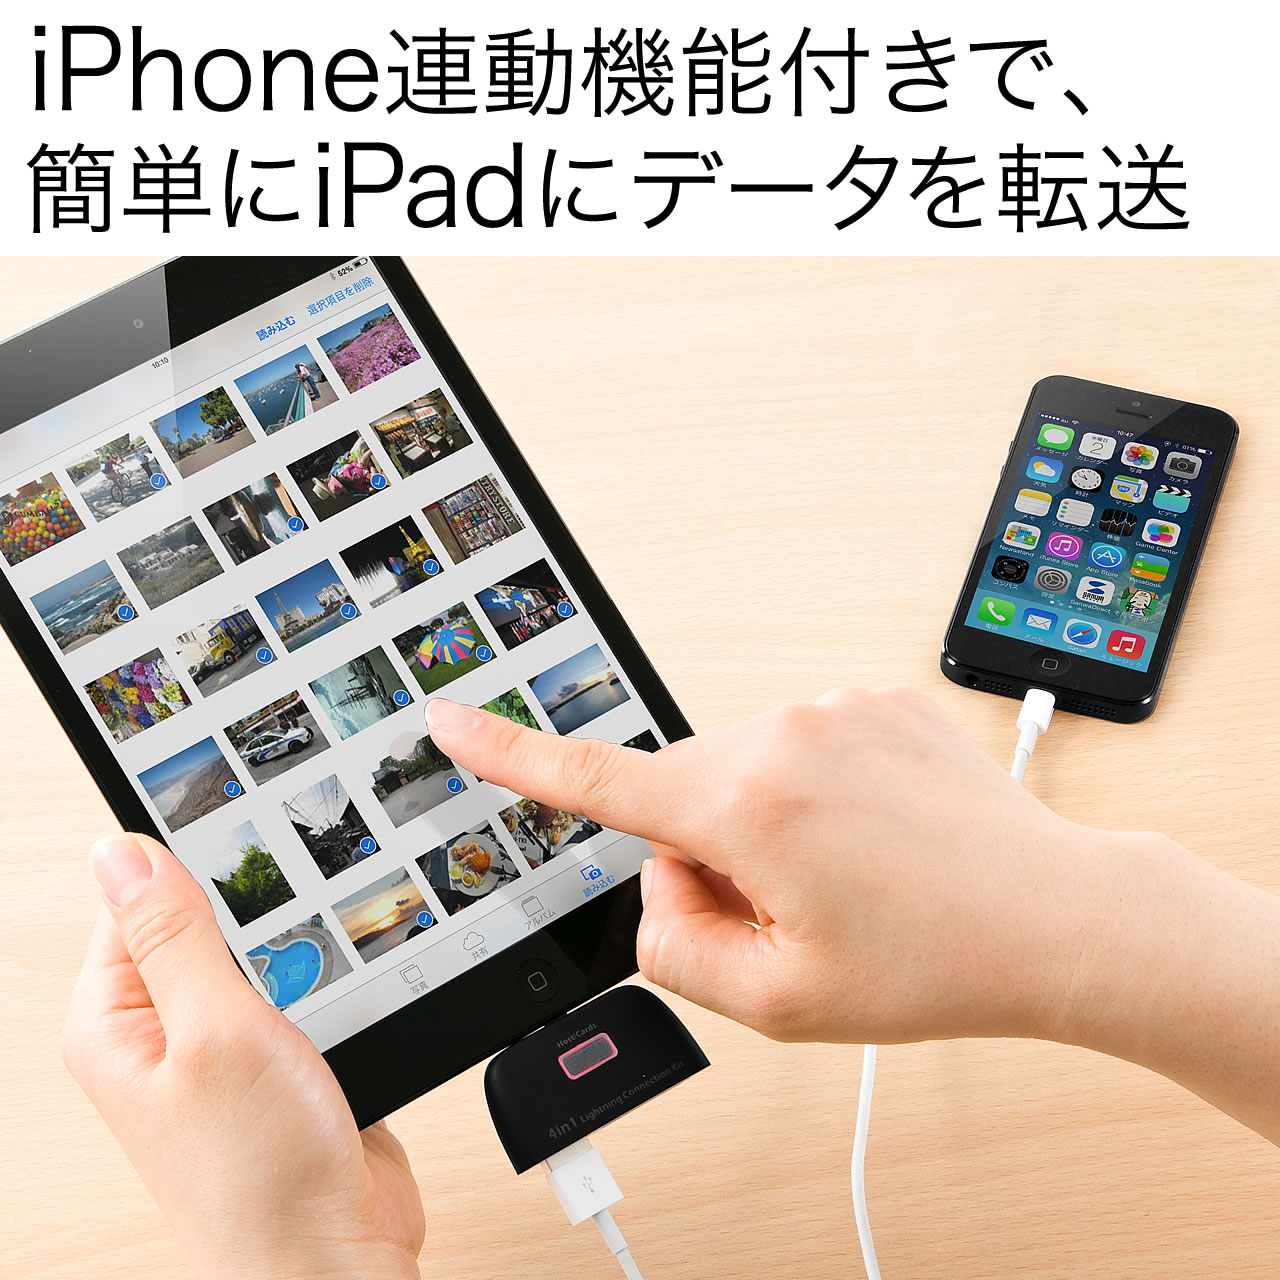 iPhoneEiPadJ[h[_[iiPhone 6s/6s PlusEiPad Pro/Air 2/mini 4ΉELightningRlN^EubNj 400-ADRIP07BKN